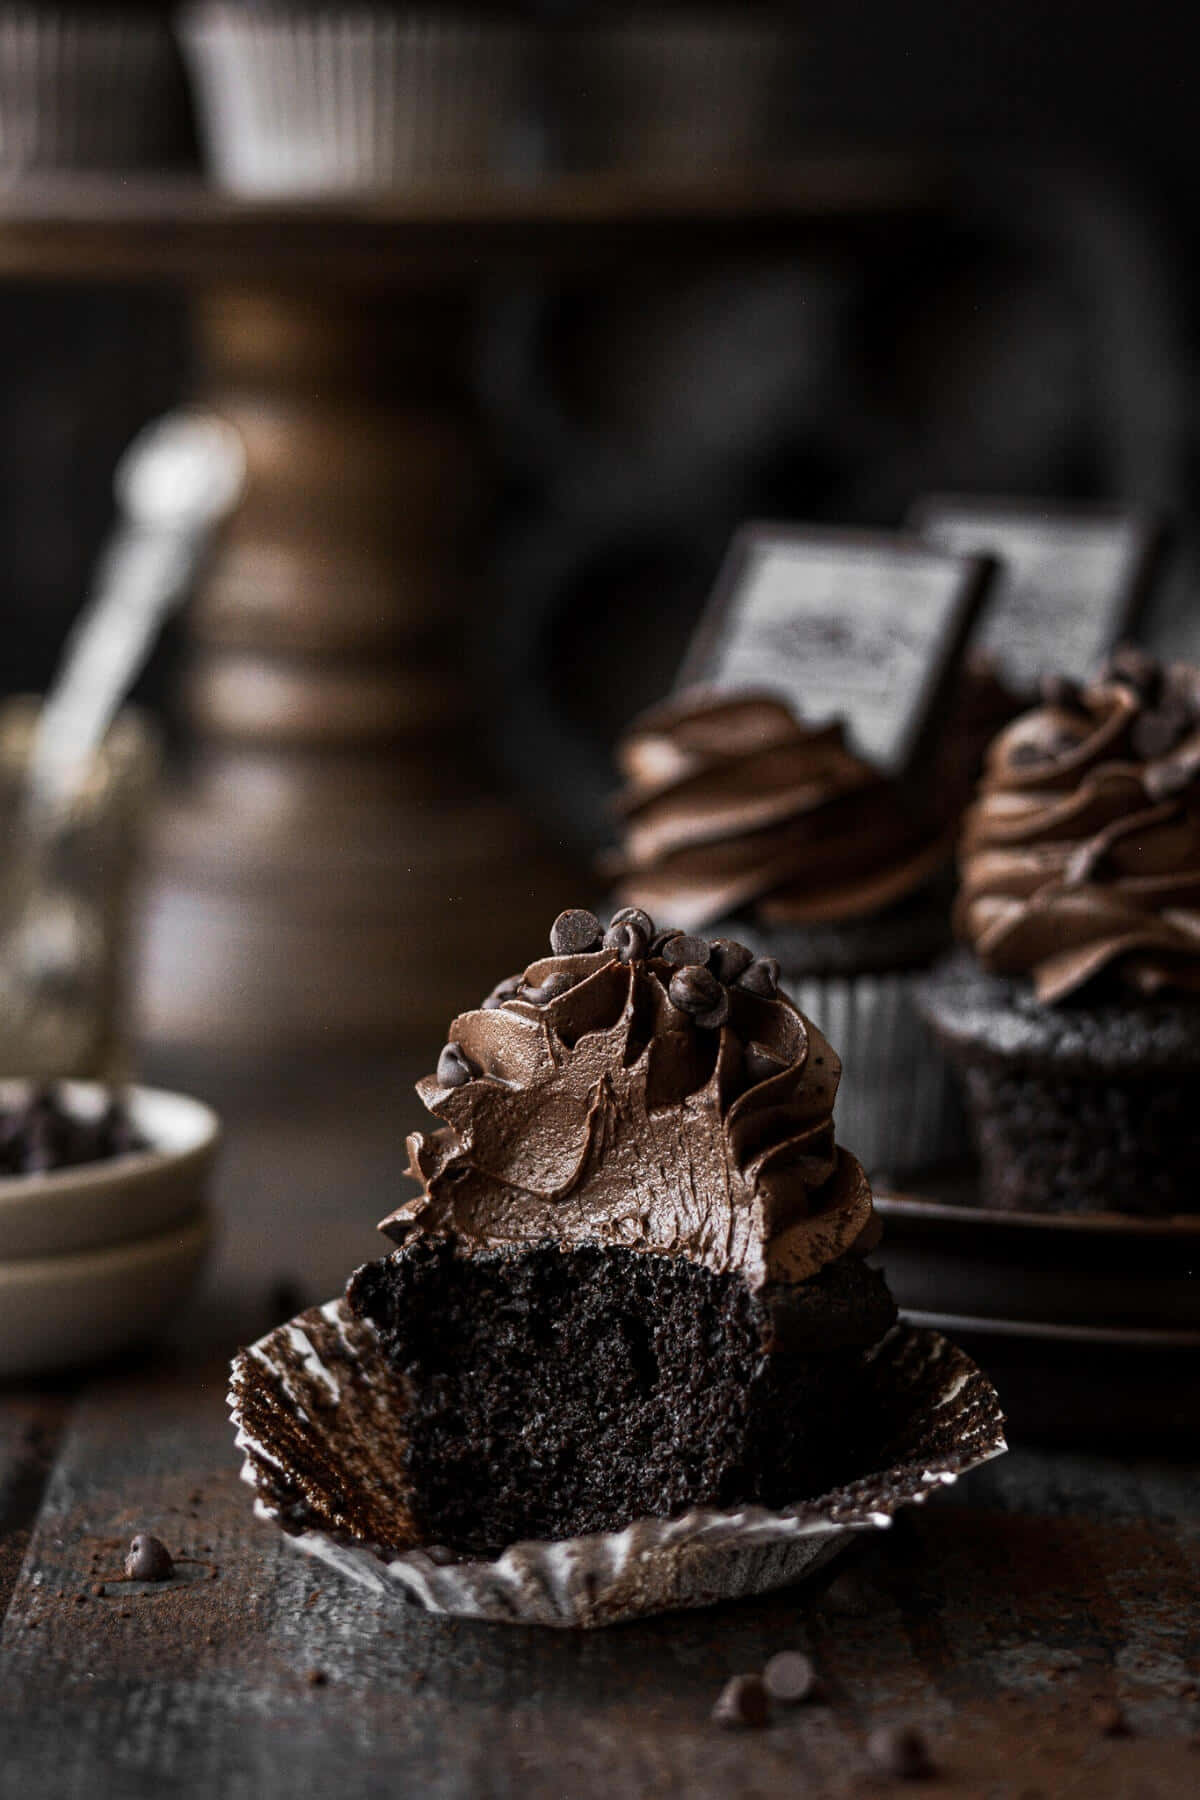 Deliciese Com Deliciosidade - Um Delicioso Cupcake Completamente Decorado Com Creme E Granulado De Chocolate